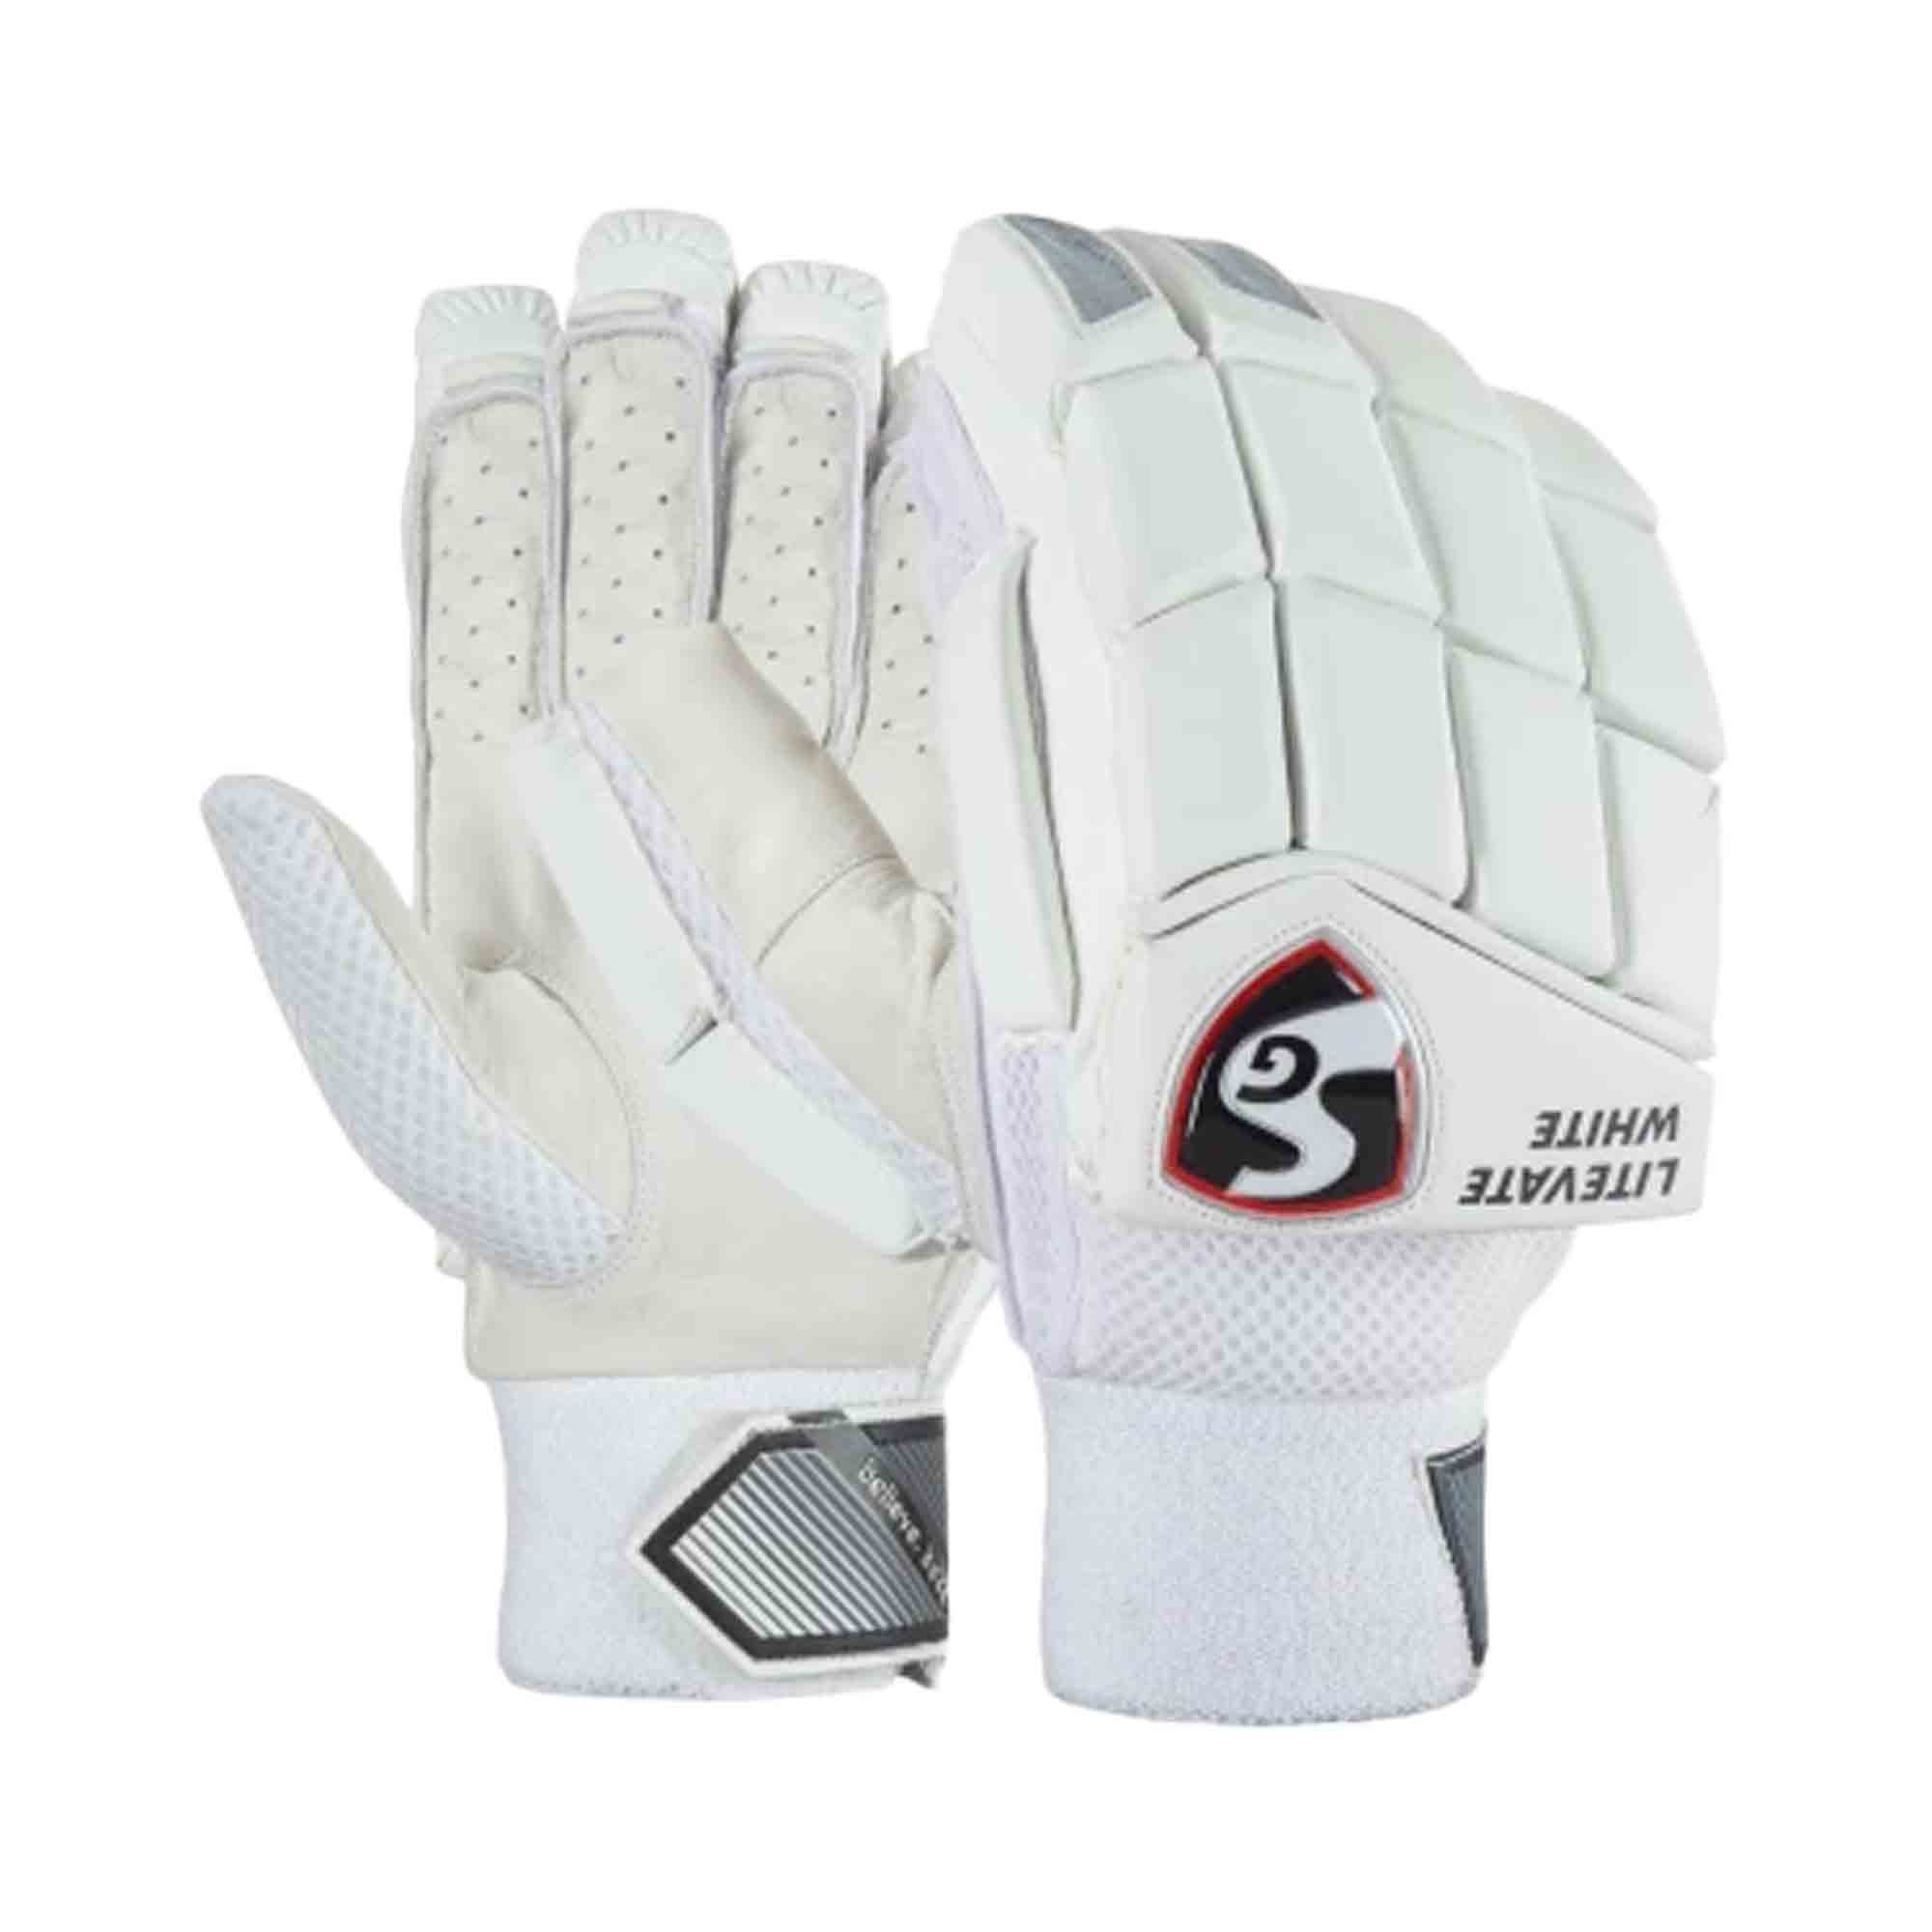 Buy SG Litevate Cricket Batting Gloves online